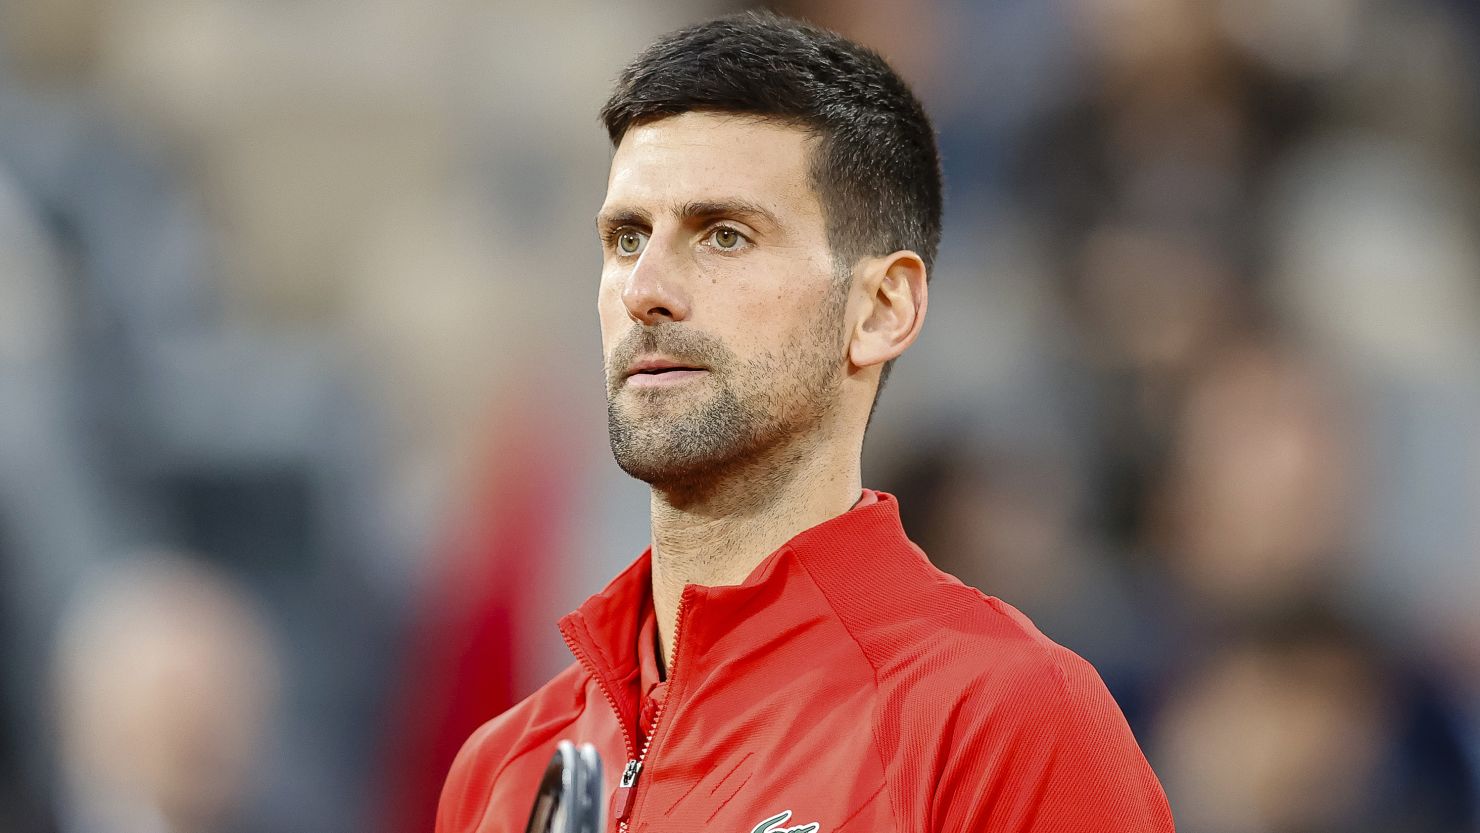 Djokovic has been vocal in criticizing Wimbledon's decision. 